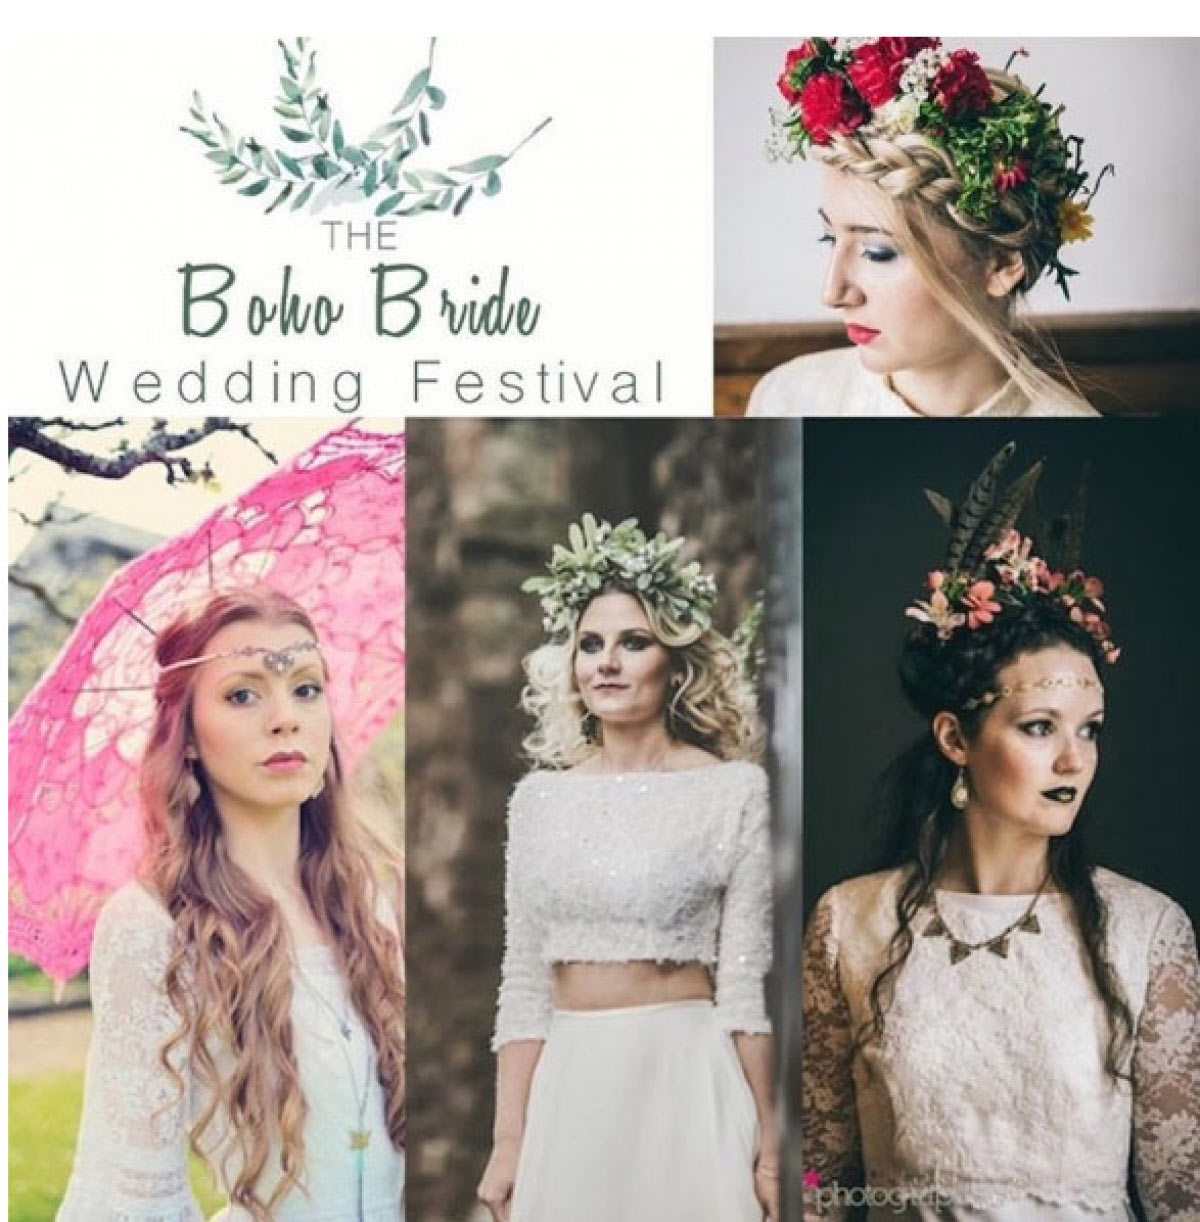 The Boho Bride Wedding Festival at Exeter Castle